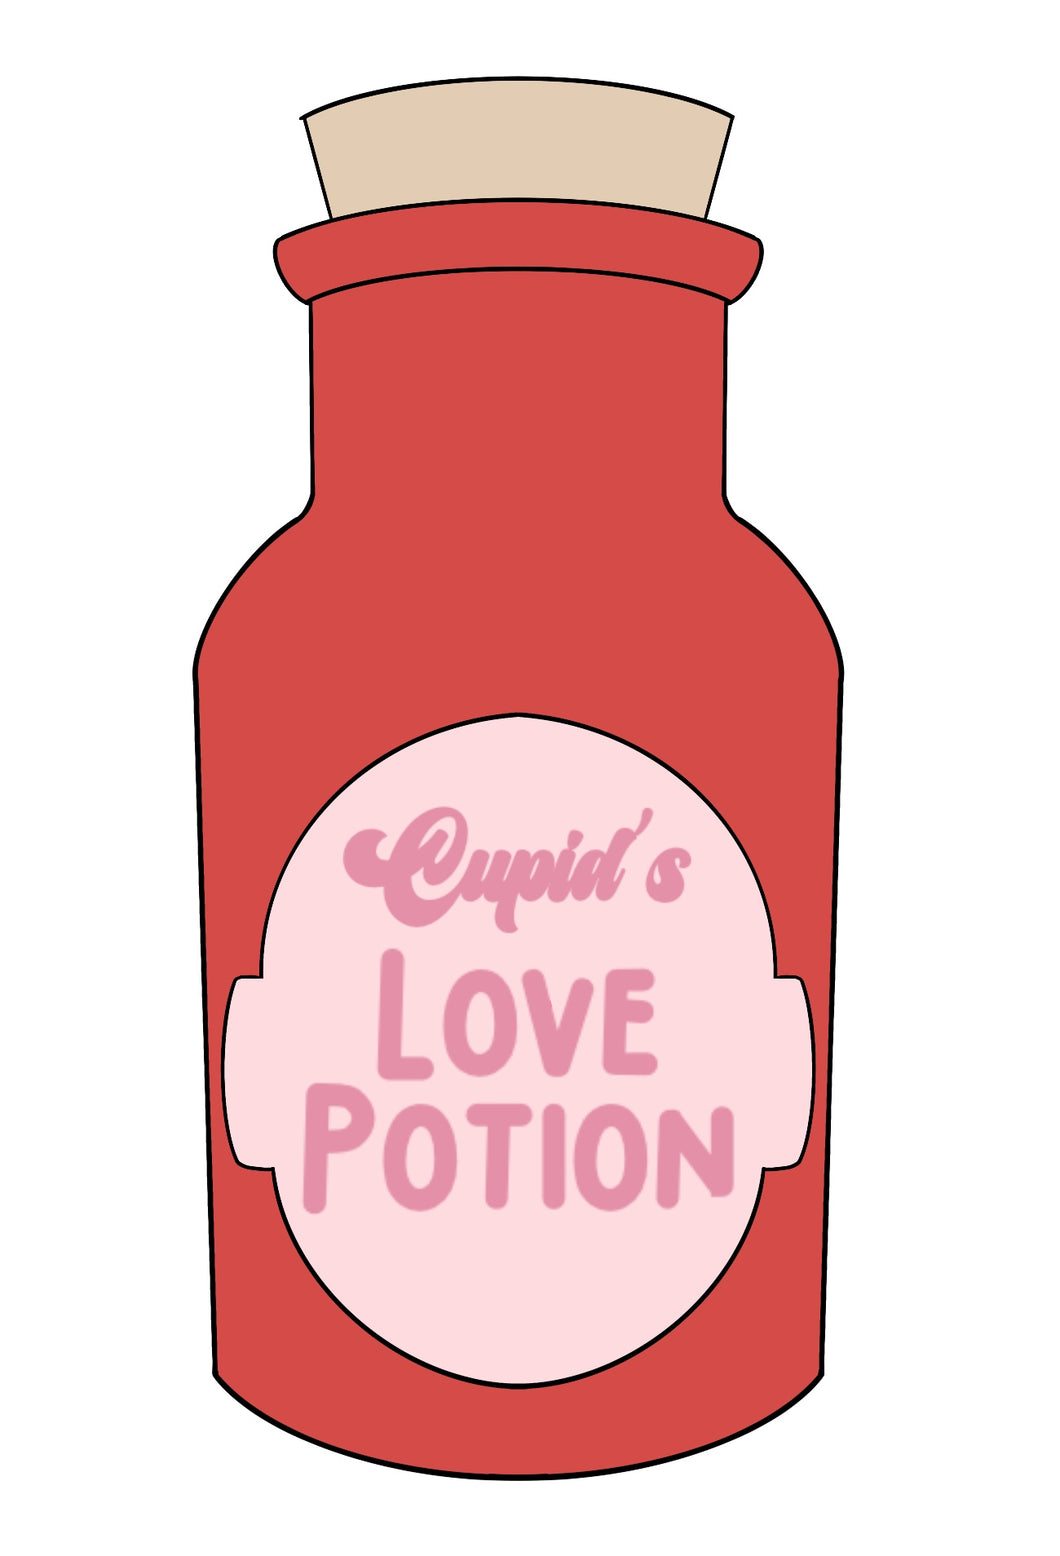 Cupids Love Potion